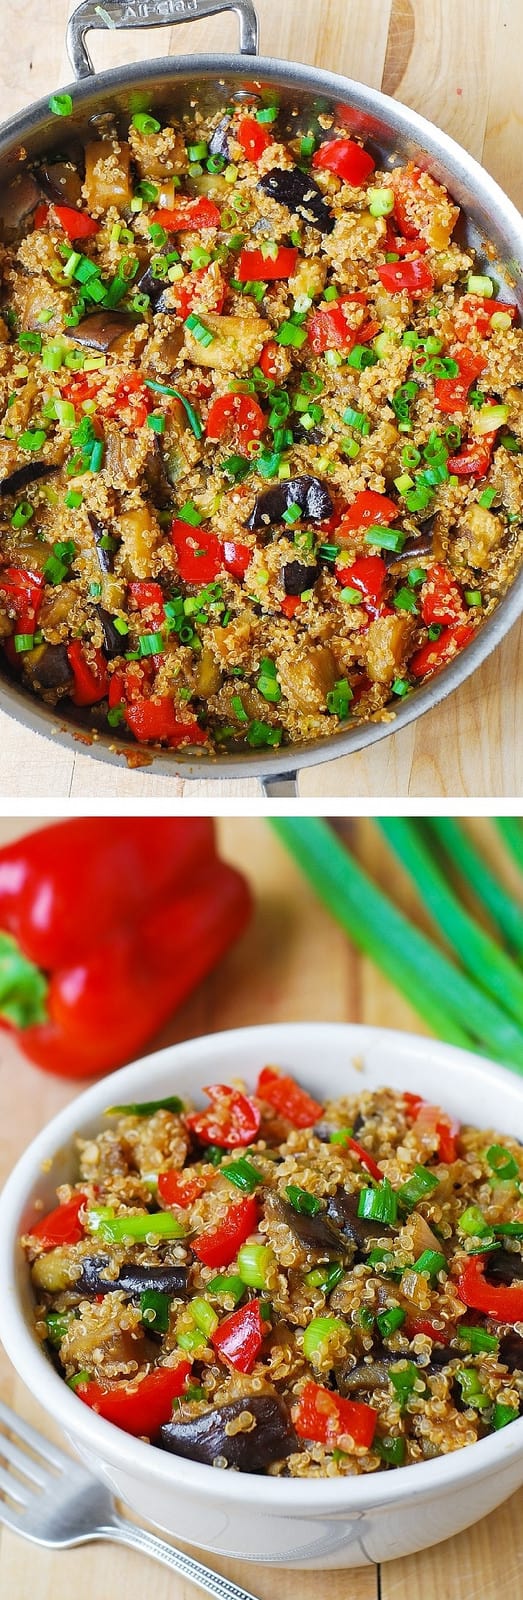 Spicy Asian eggplant and quinoa